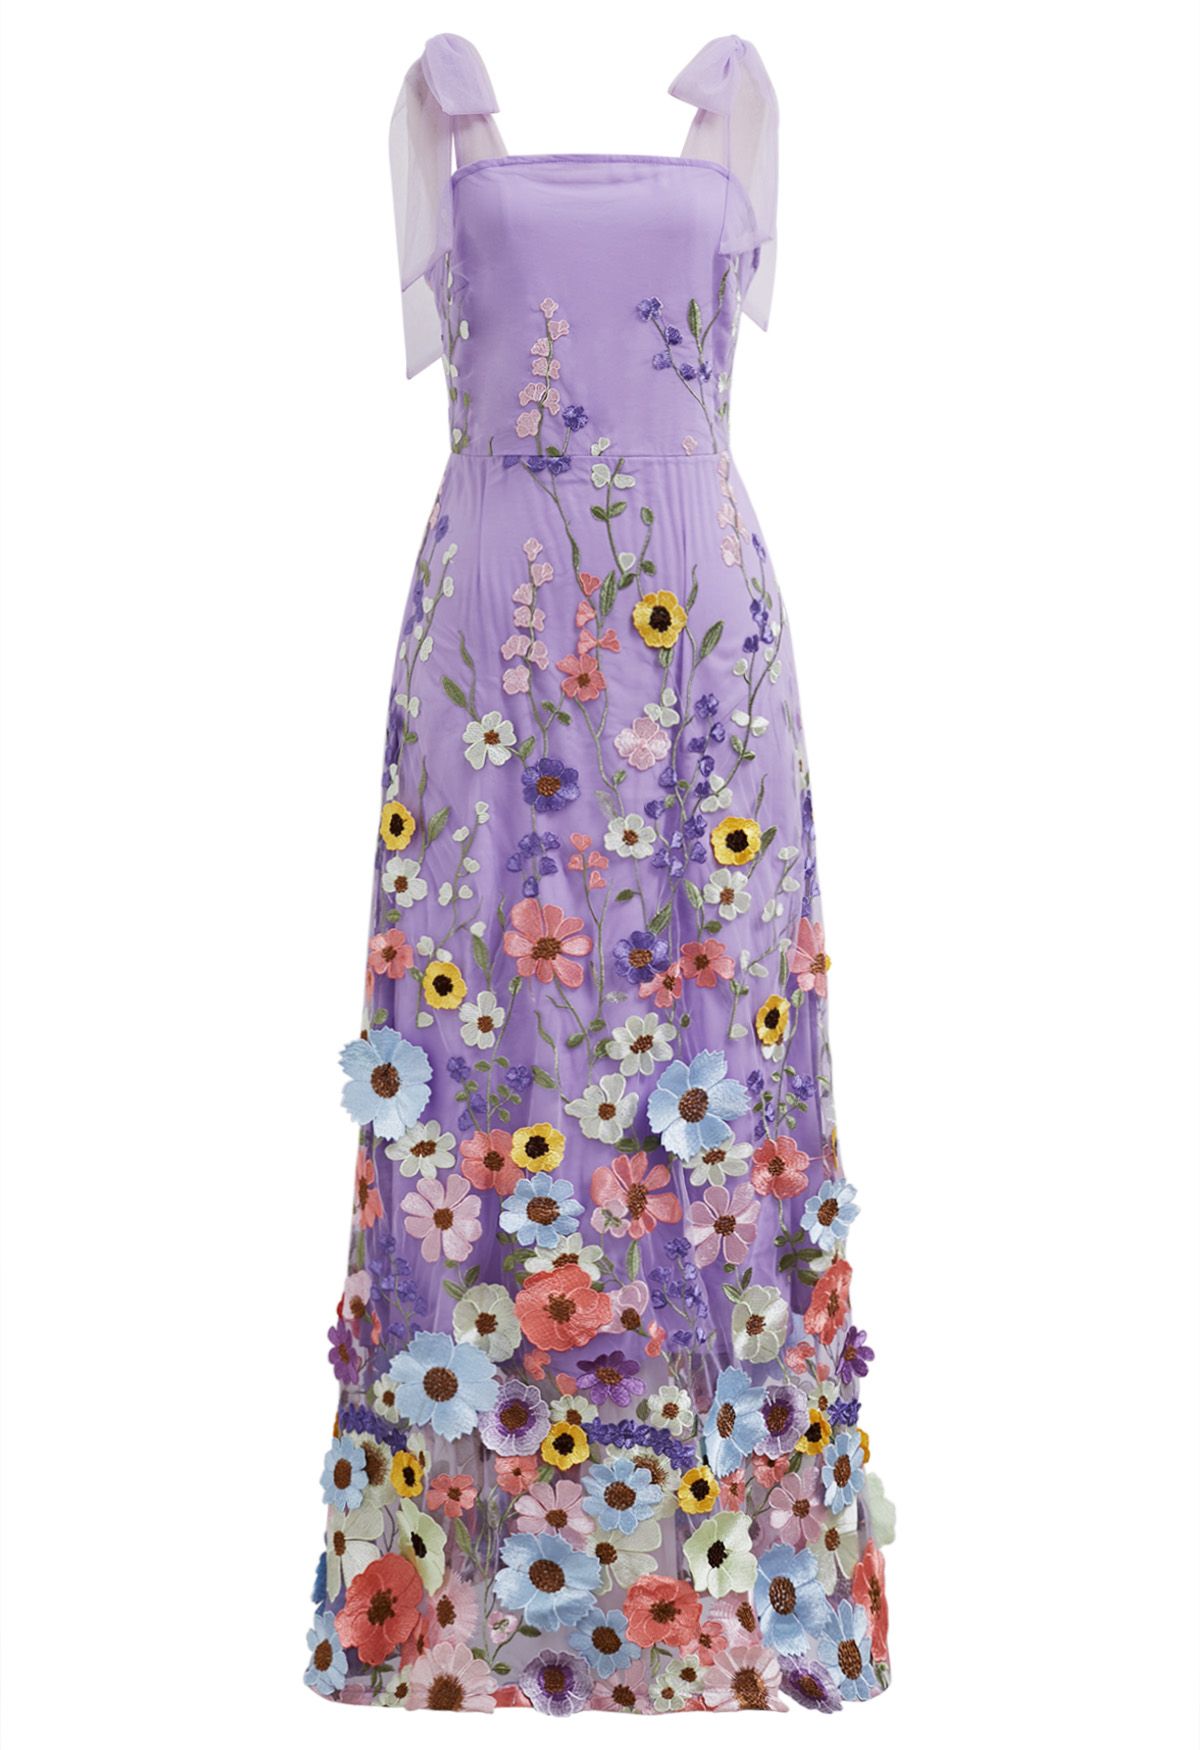 3D Floral Applique Tie-Strap Mesh Tulle Maxi Dress in Lilac